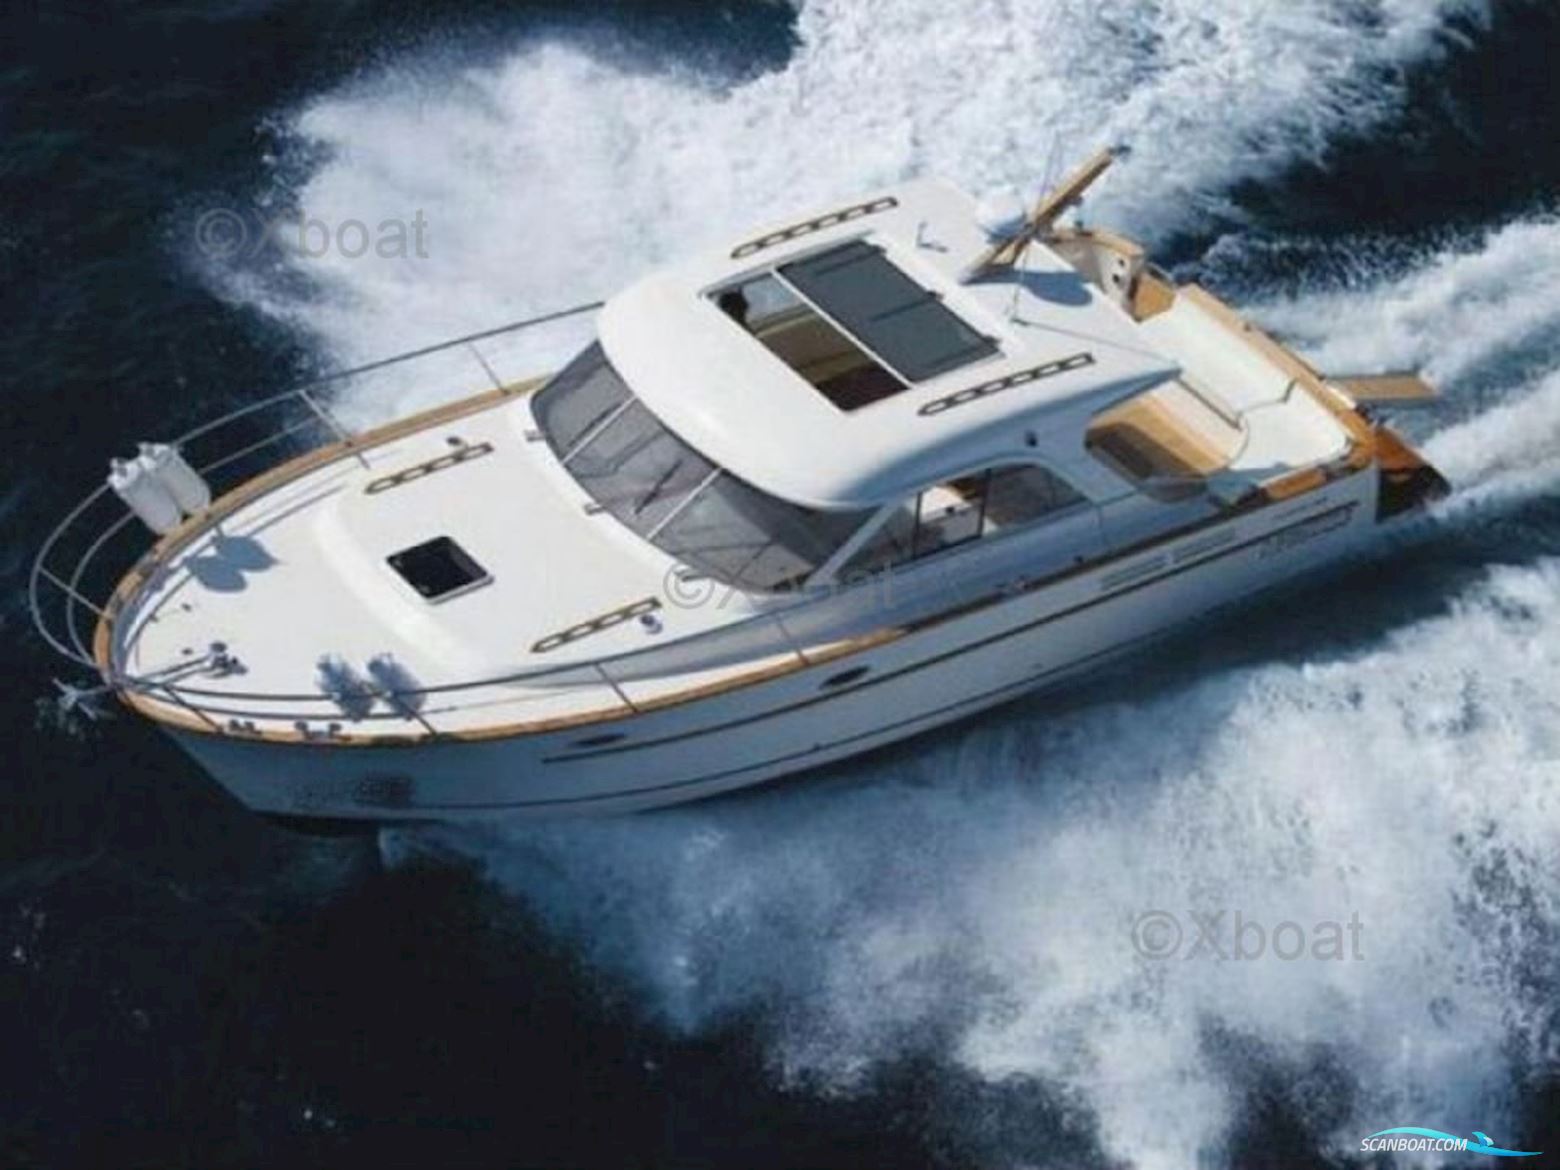 Arcoa 39 Mystic Motor boat 2006, with Volvo Penta engine, France